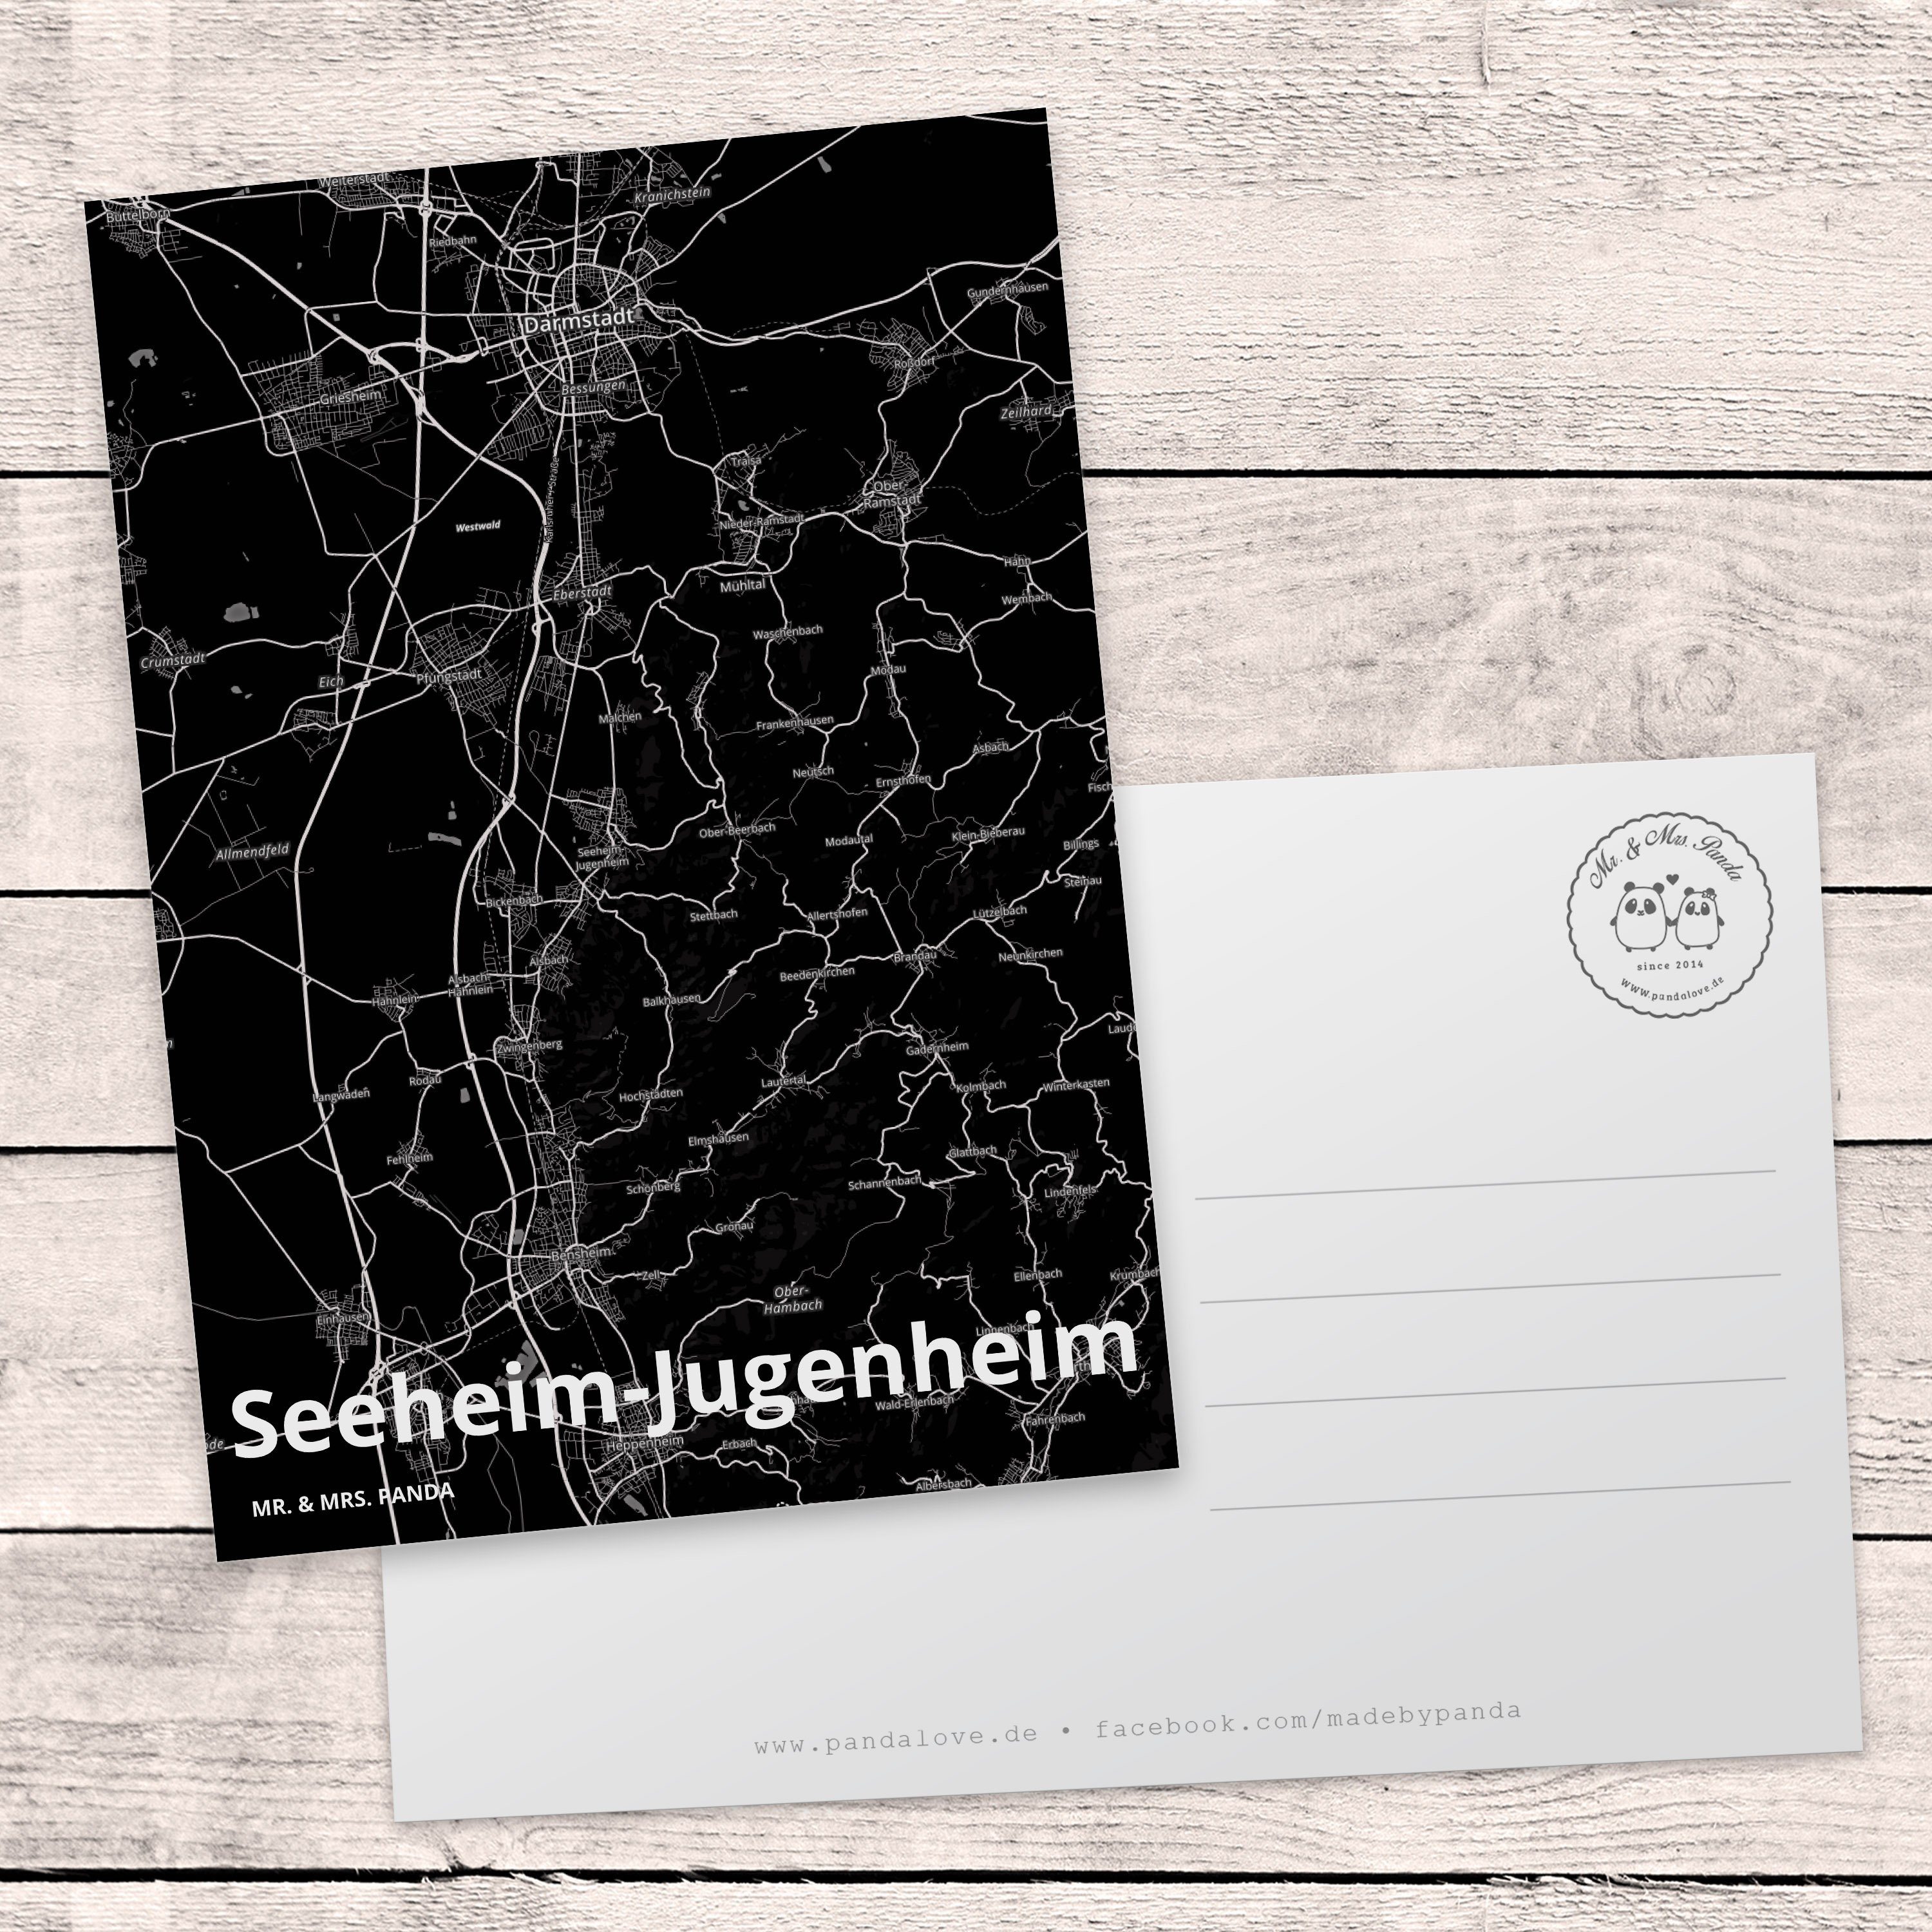 Mr. - Städte, & Seeheim-Jugenheim Einladung, Dankeskarte, O Postkarte Panda Mrs. Dorf, Geschenk,